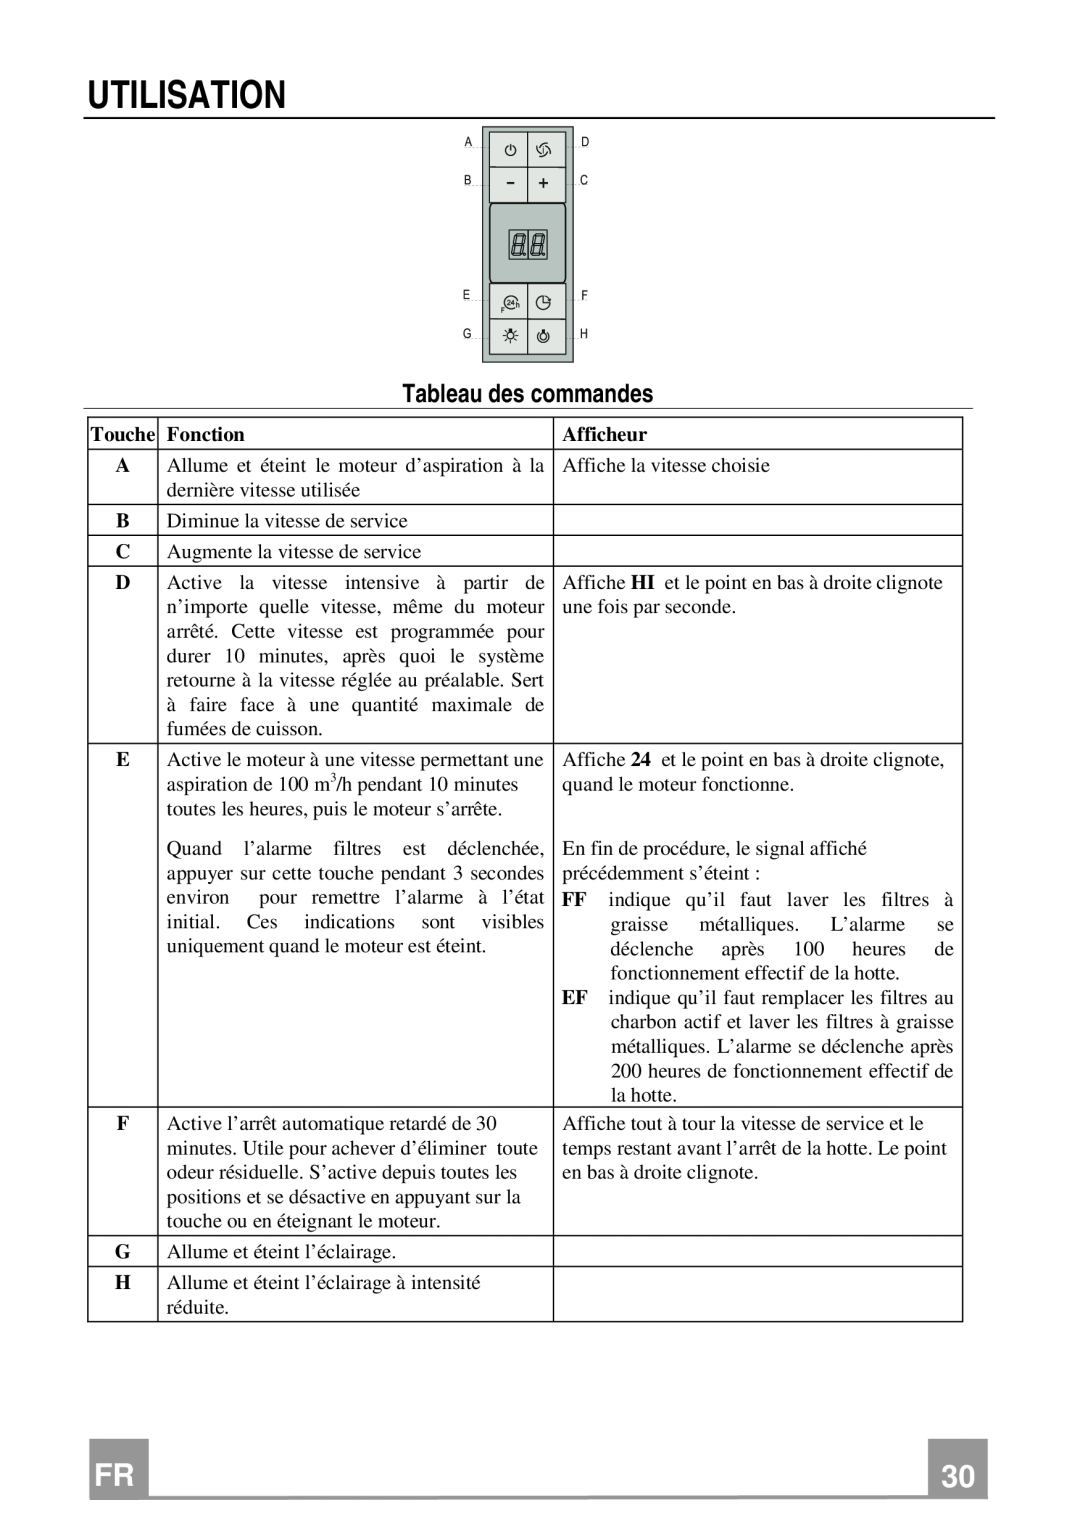 Franke Consumer Products FQD 907 manual Utilisation, Tableau des commandes, Fonction, Afficheur 